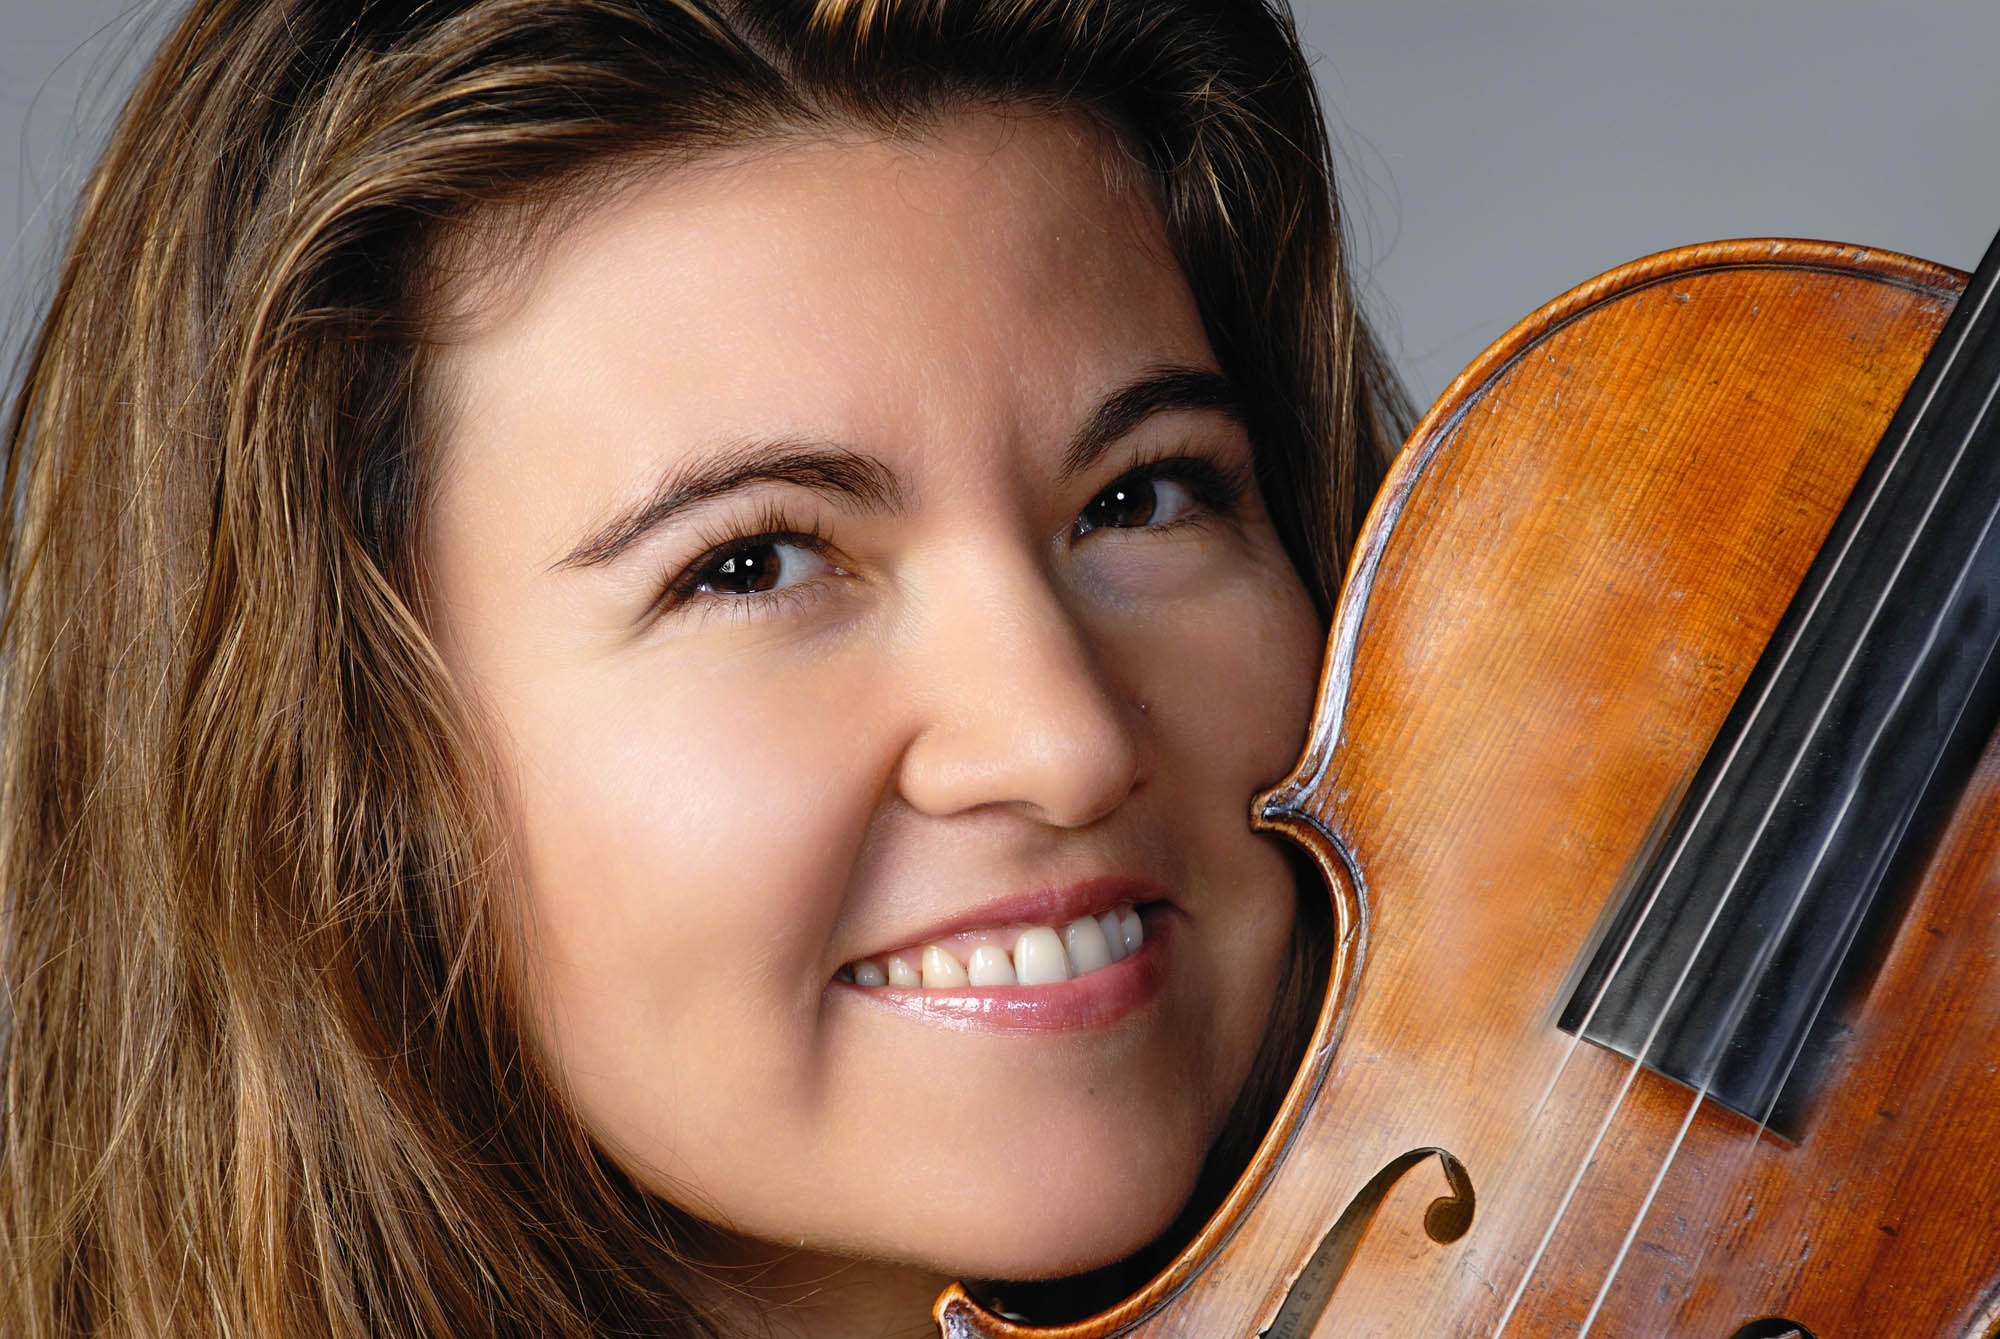 professional headshot of female violinist